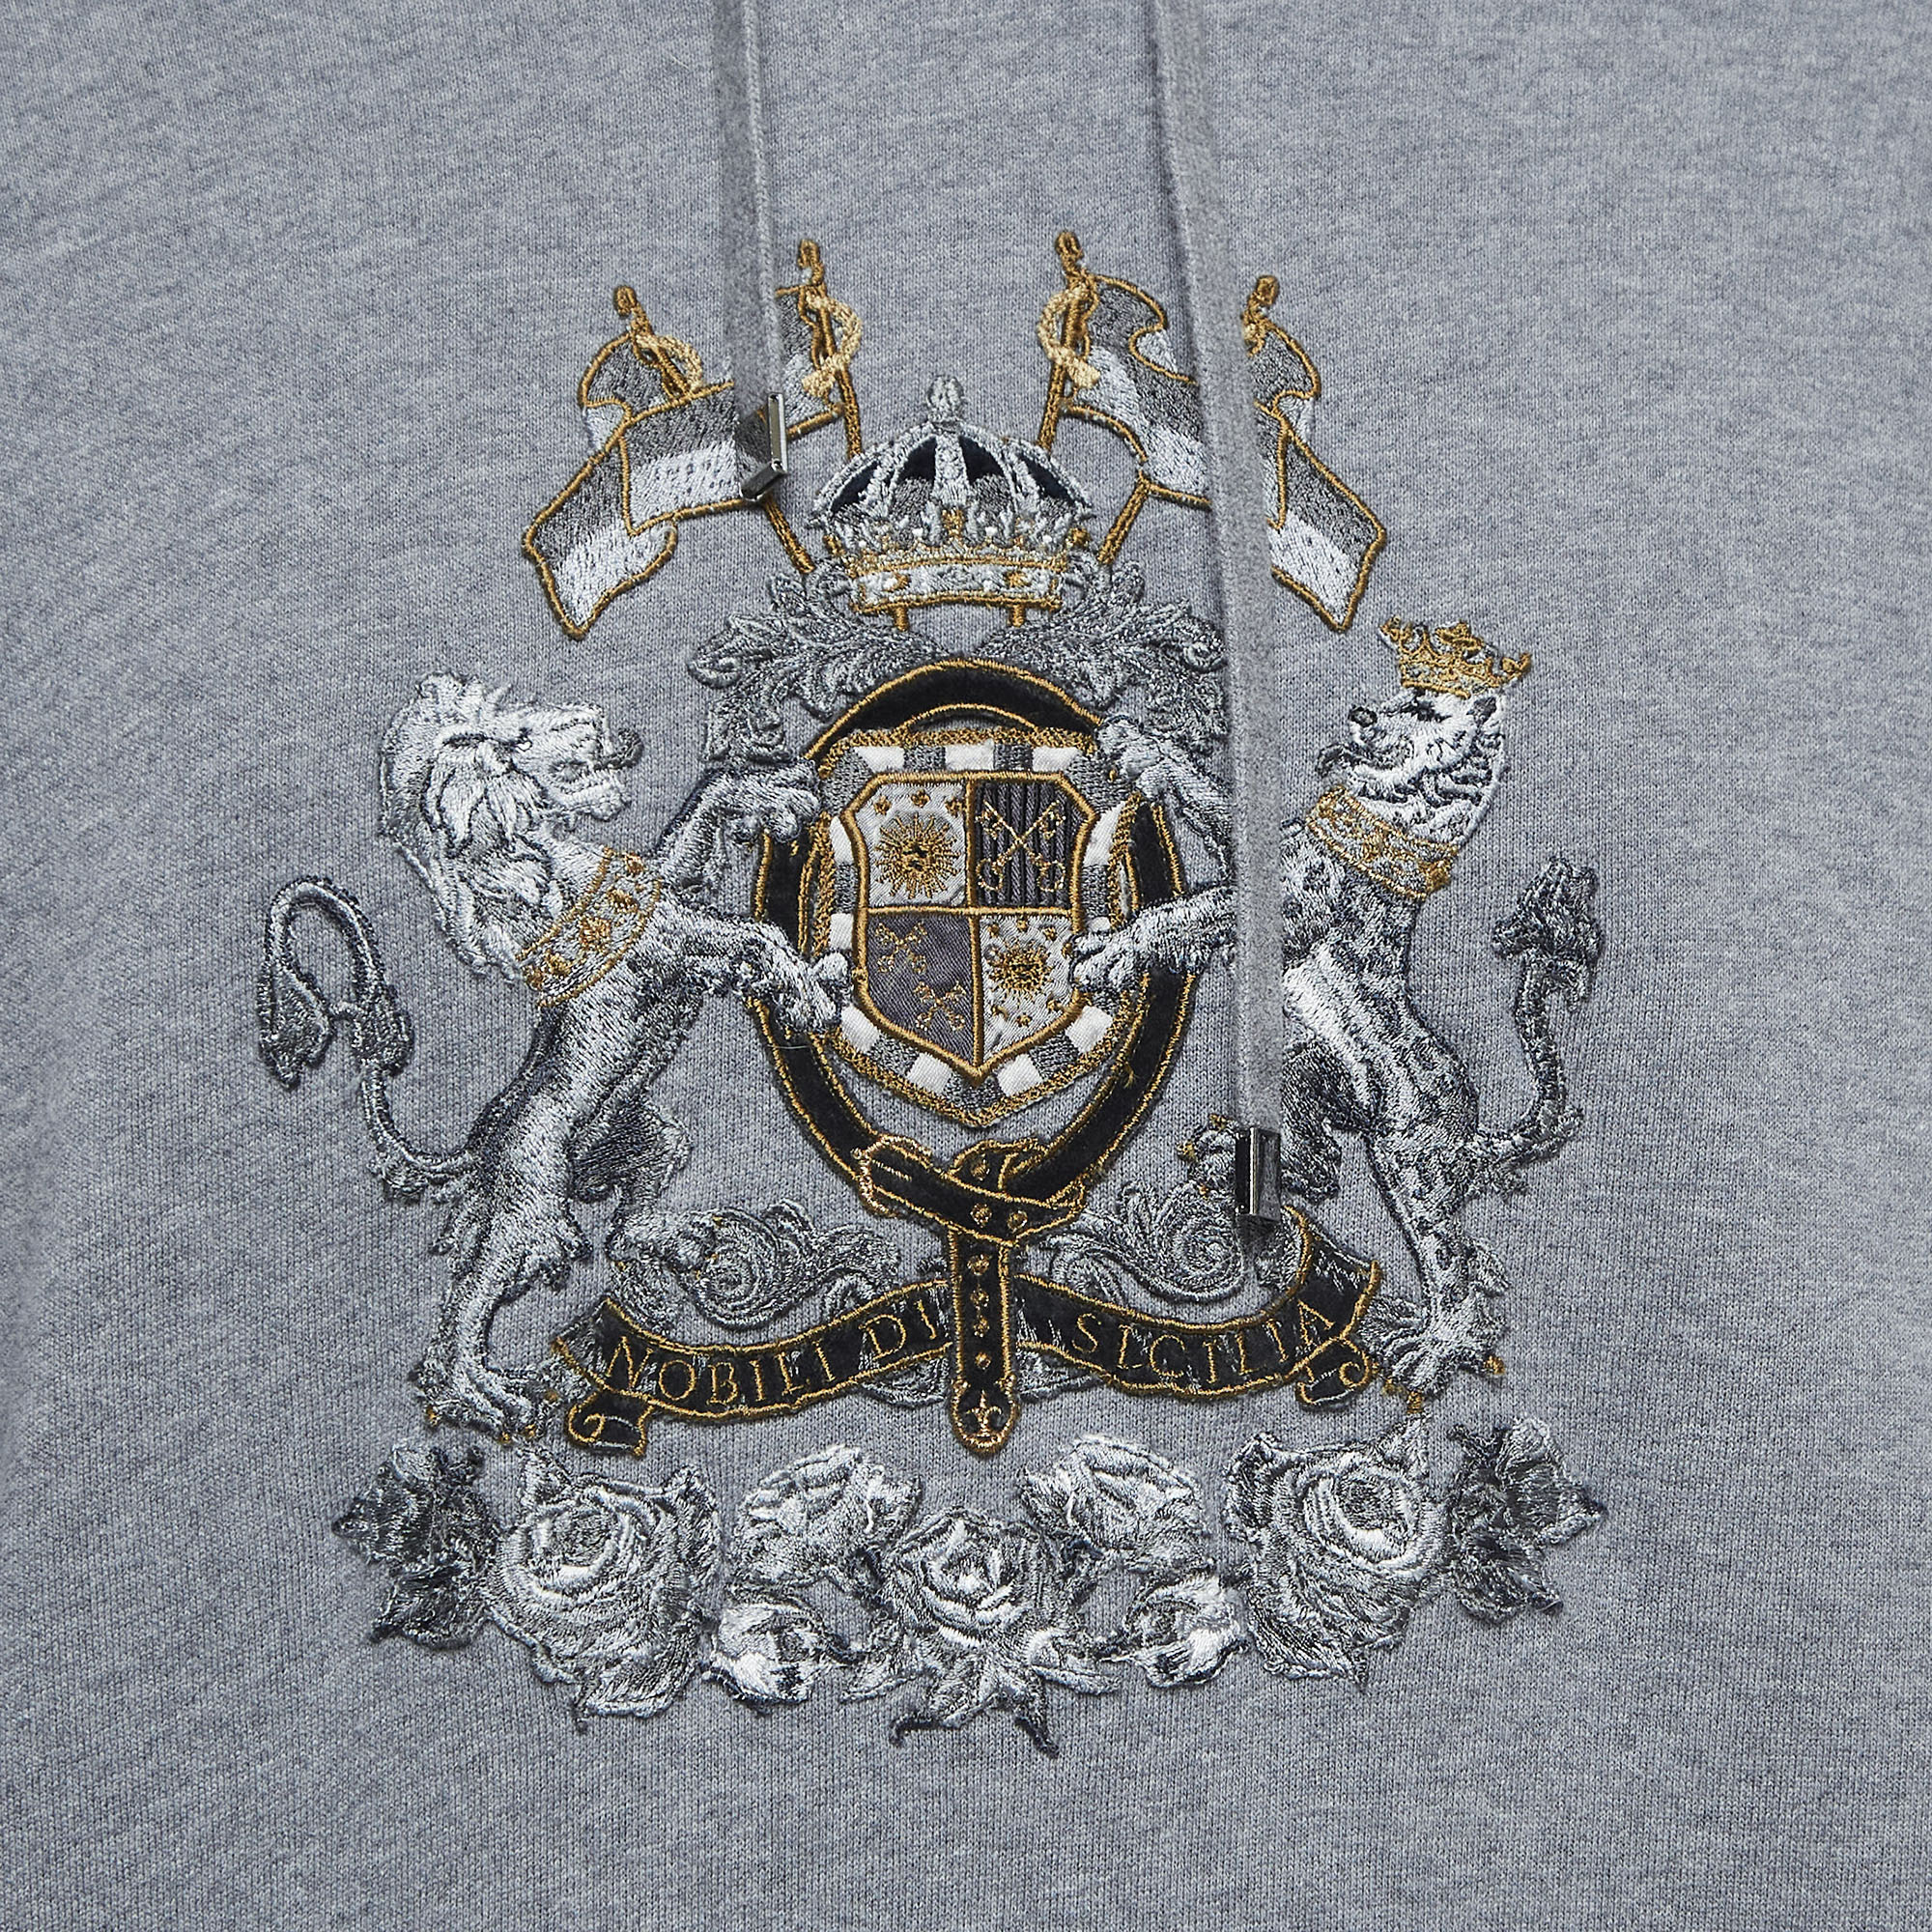 Dolce & Gabbana Grey Embroidered Cotton Knit Hoodie XL